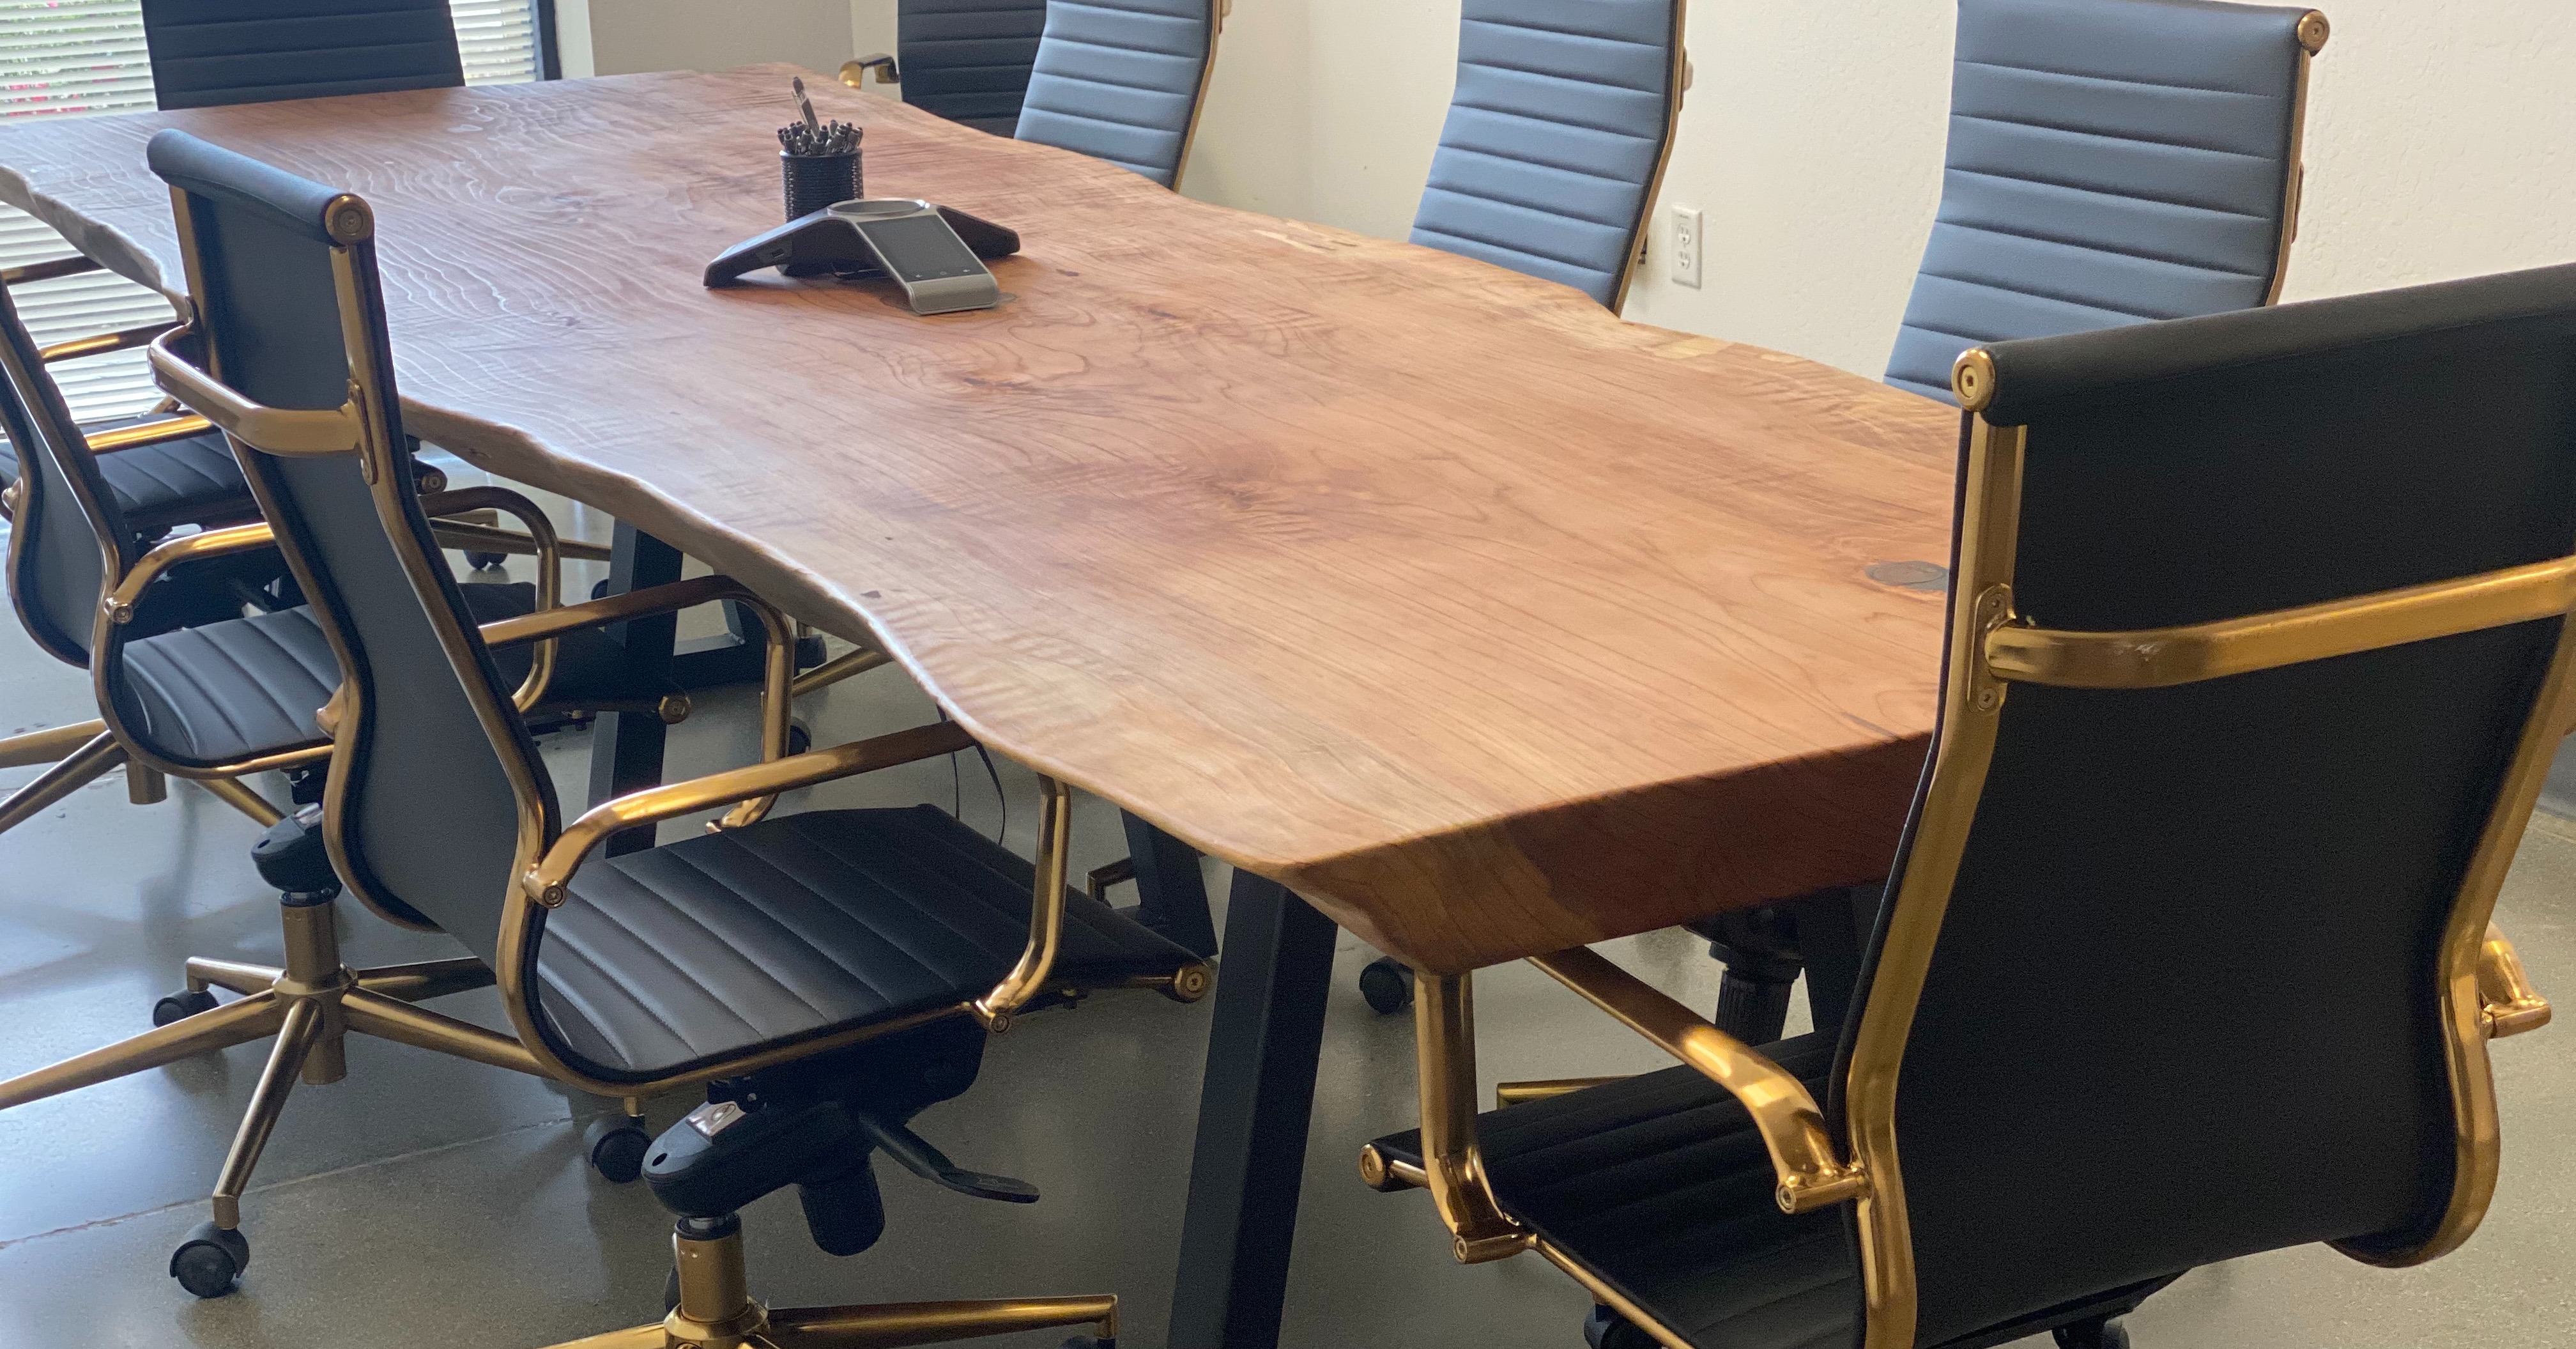 Improve Meeting Room Design with 'Hidden' Technology